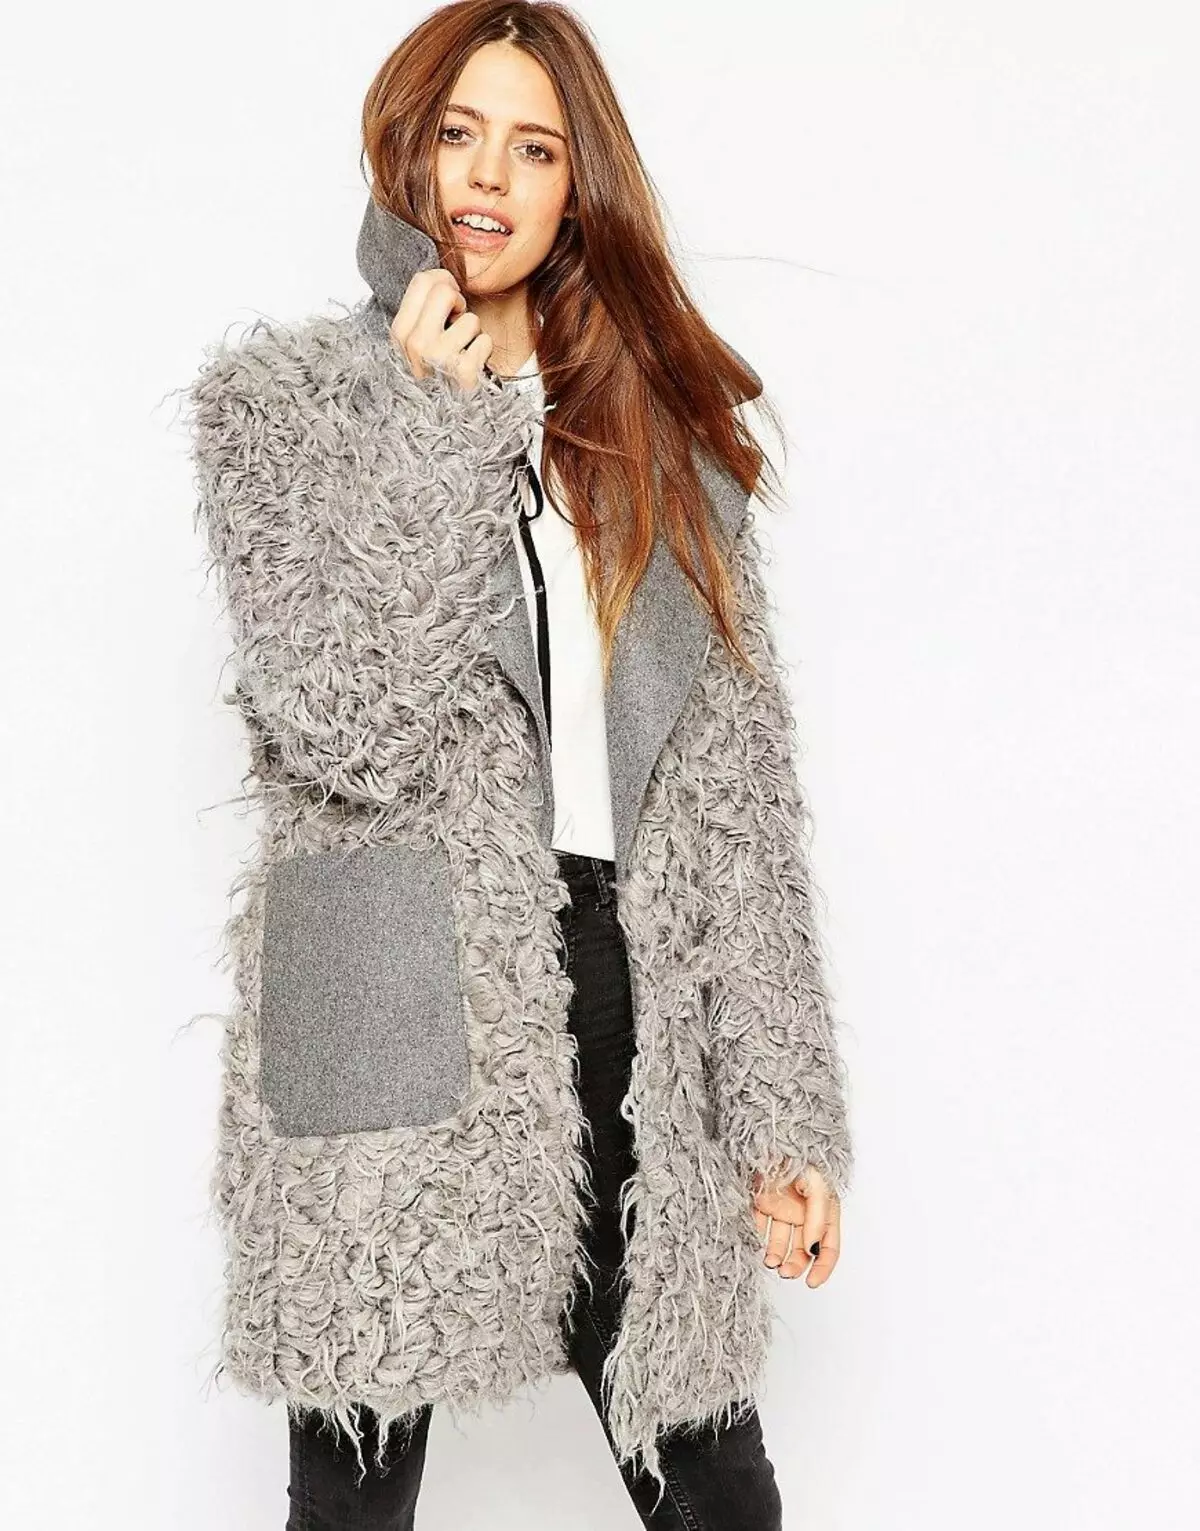 Пальто зі штучного хутра (78 фото): з каракулю, з капюшоном, плюшеве, жіночі моделі пальто 621_8